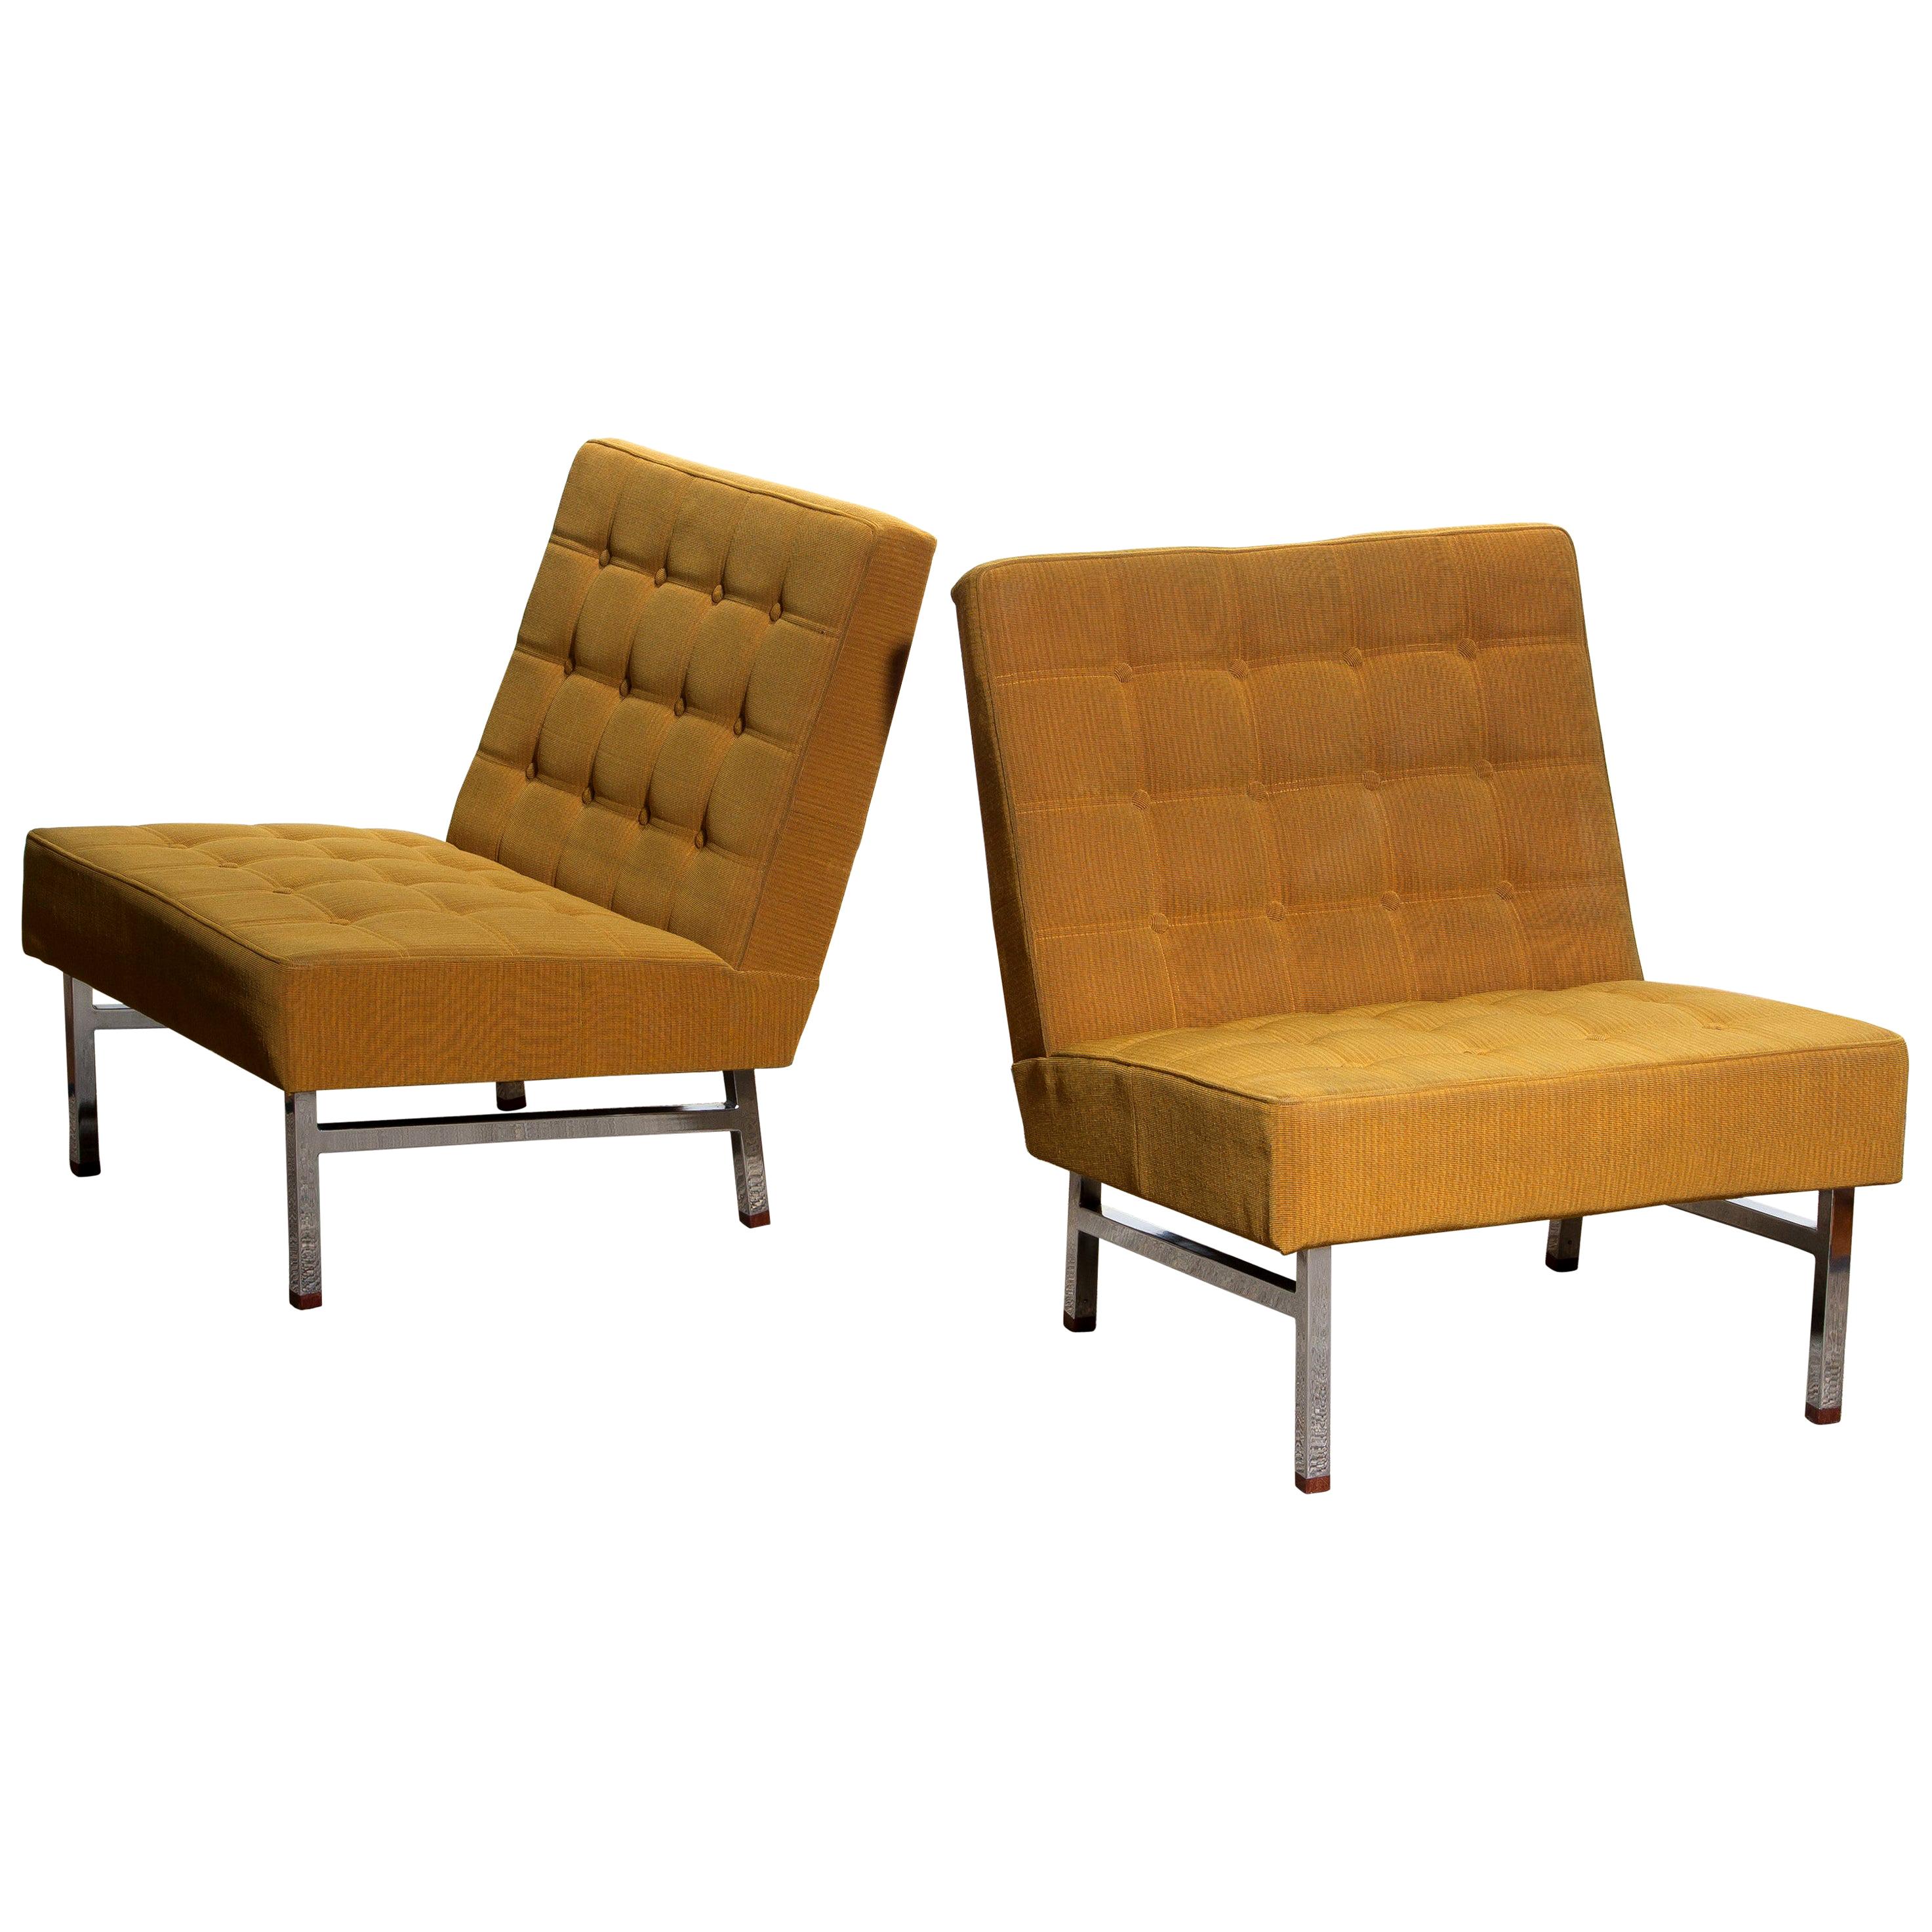 1960s Pair of Lounge or Easy Chairs by Karl Erik Ekselius for JOC Möbler, Sweden